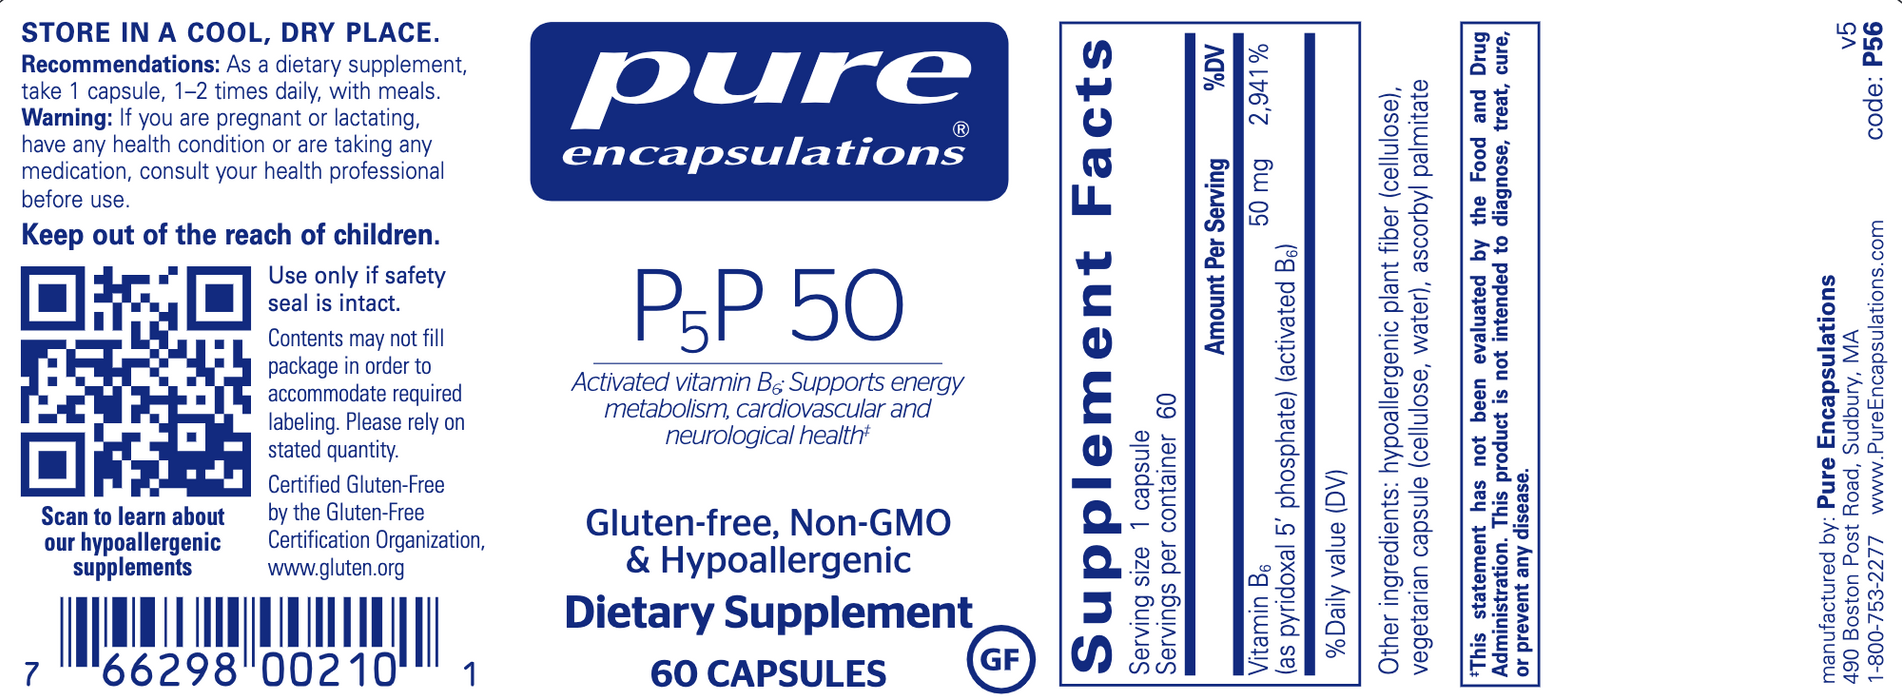 P5P 50 (activated vitamin B6)-Vitamins & Supplements-Pure Encapsulations-180 Capsules-Pine Street Clinic